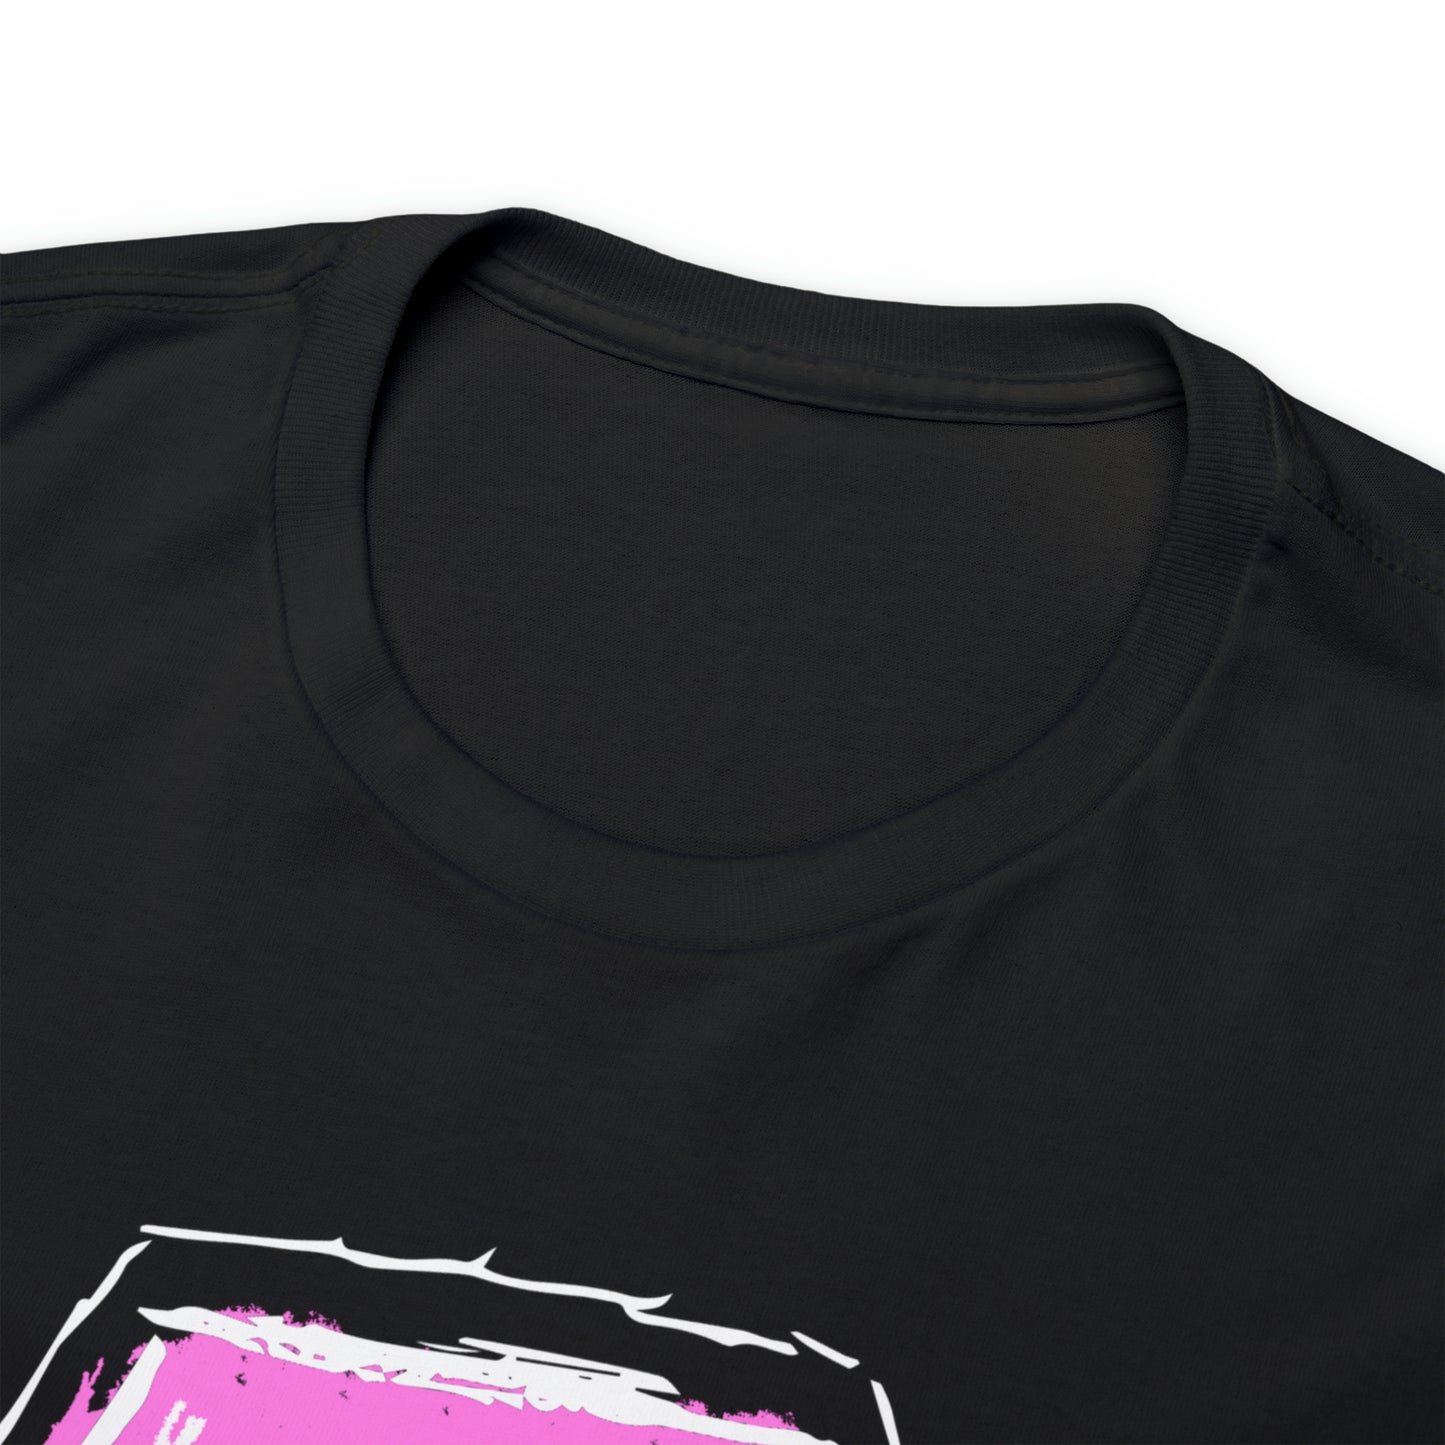 Str8jaket "Pink Coffin" T-Shirt